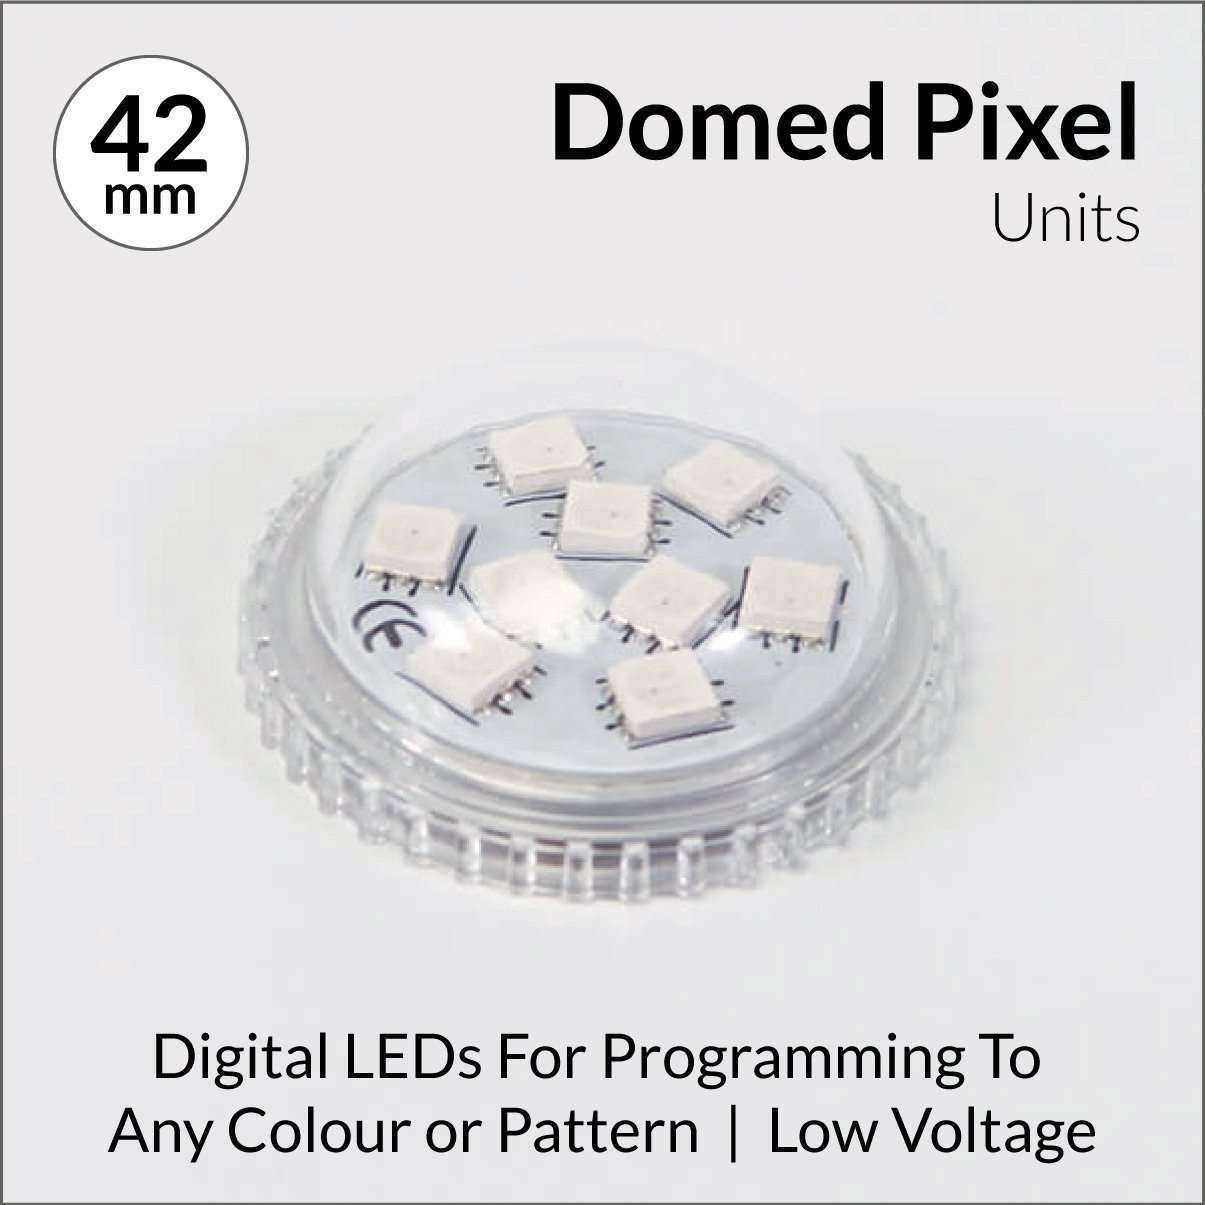 Domed Pixel